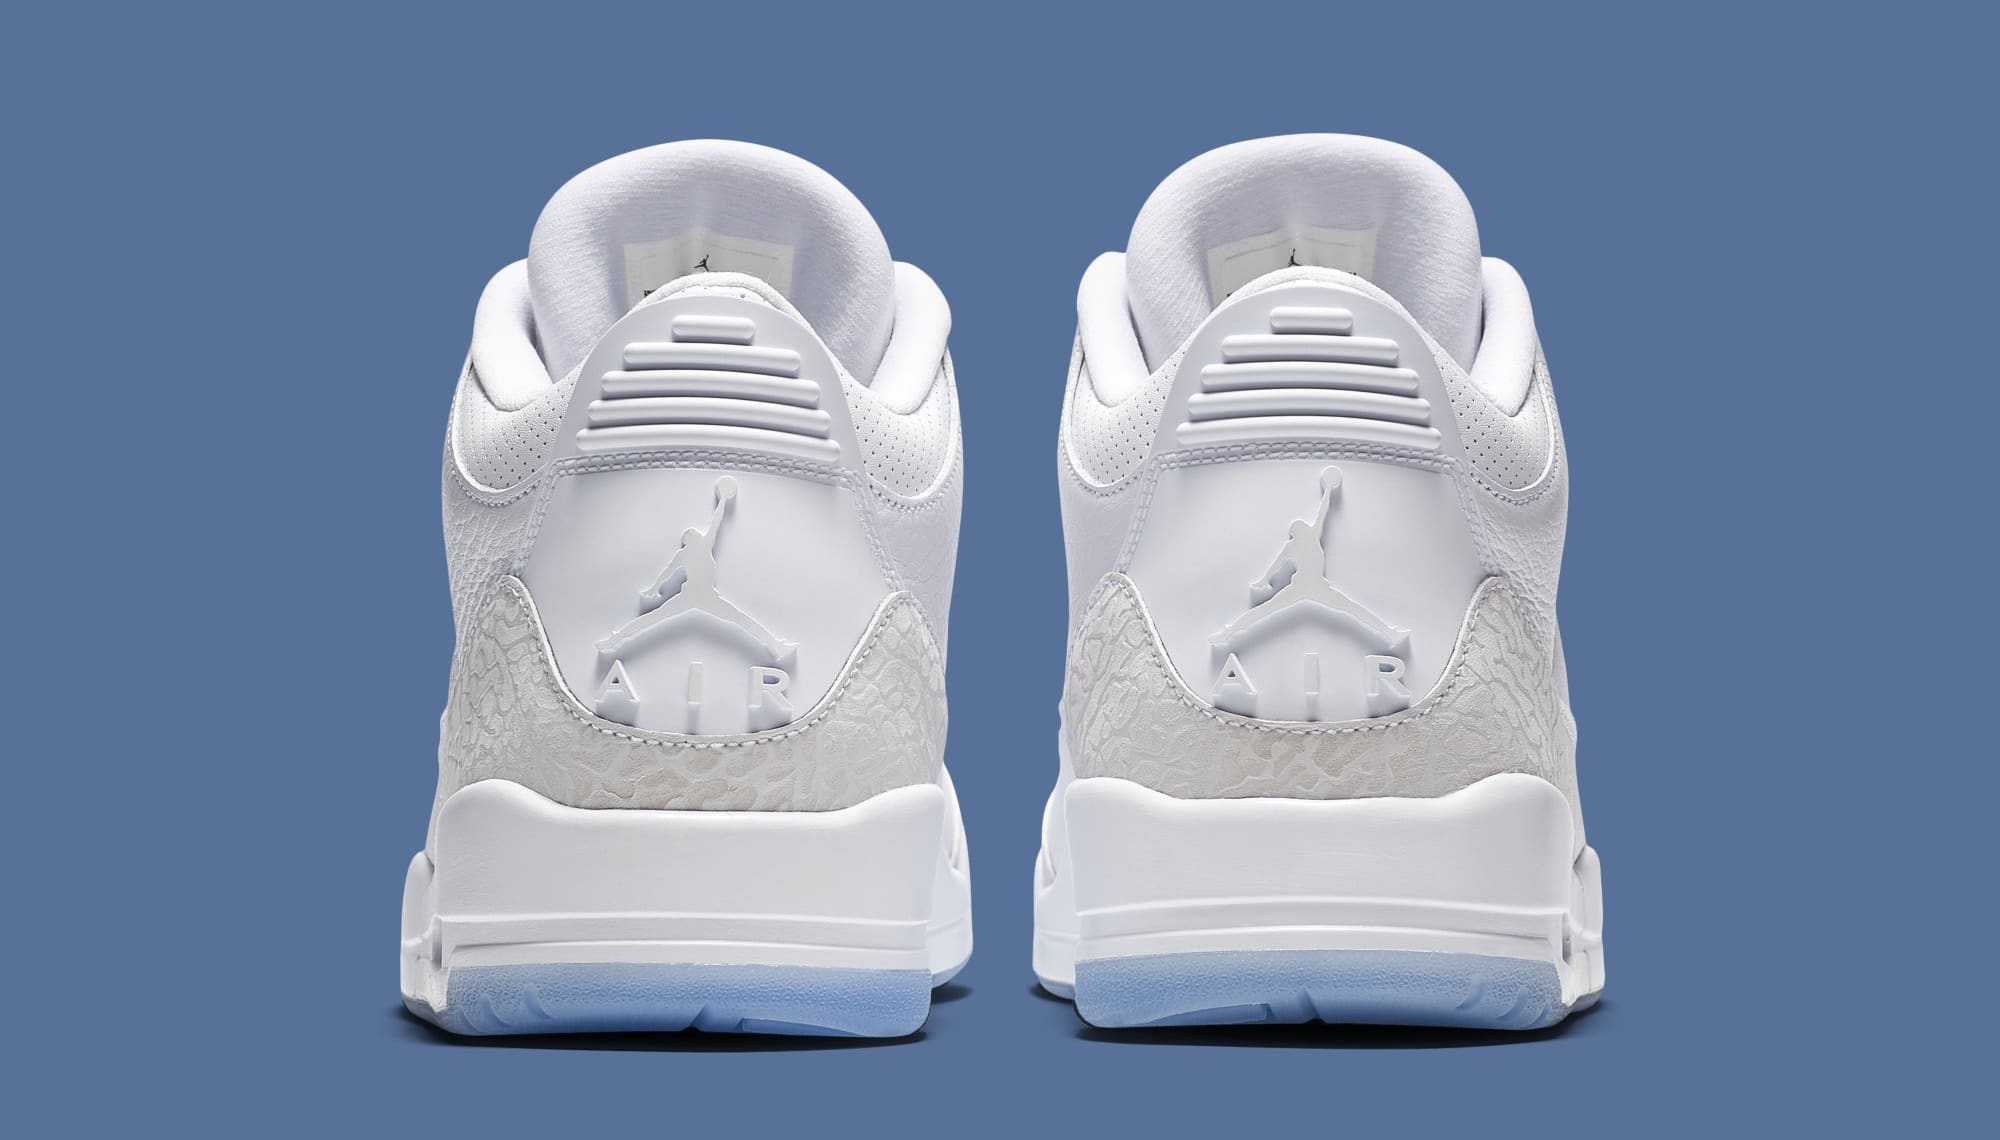 Pure White' Air Jordan 3 Retro Set to Drop This Summer | Complex